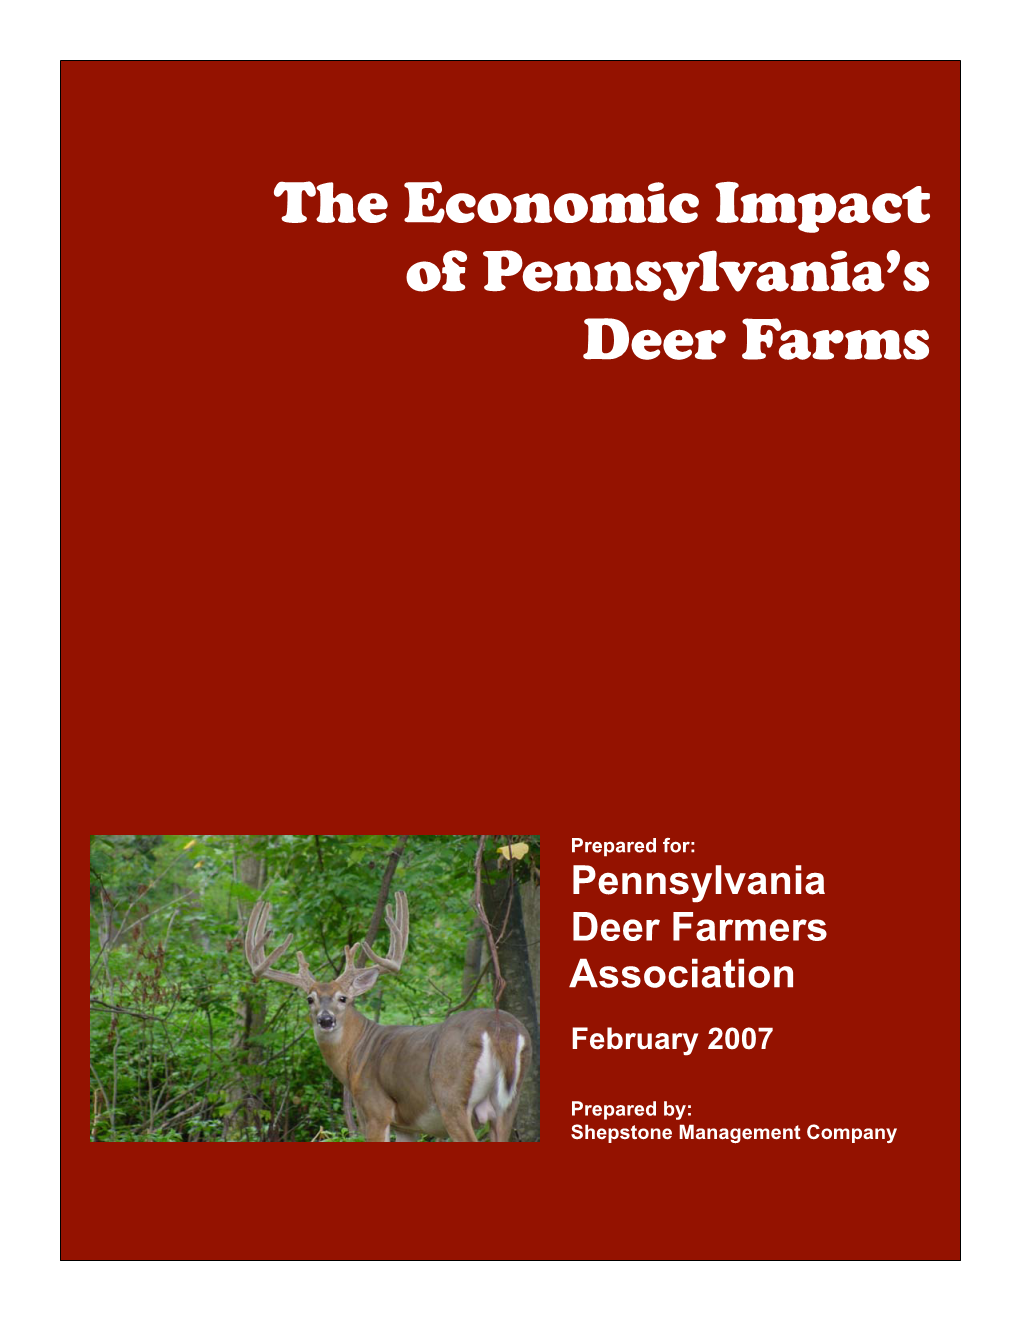 The Economic Impact of Pennsylvania's Deer Farms